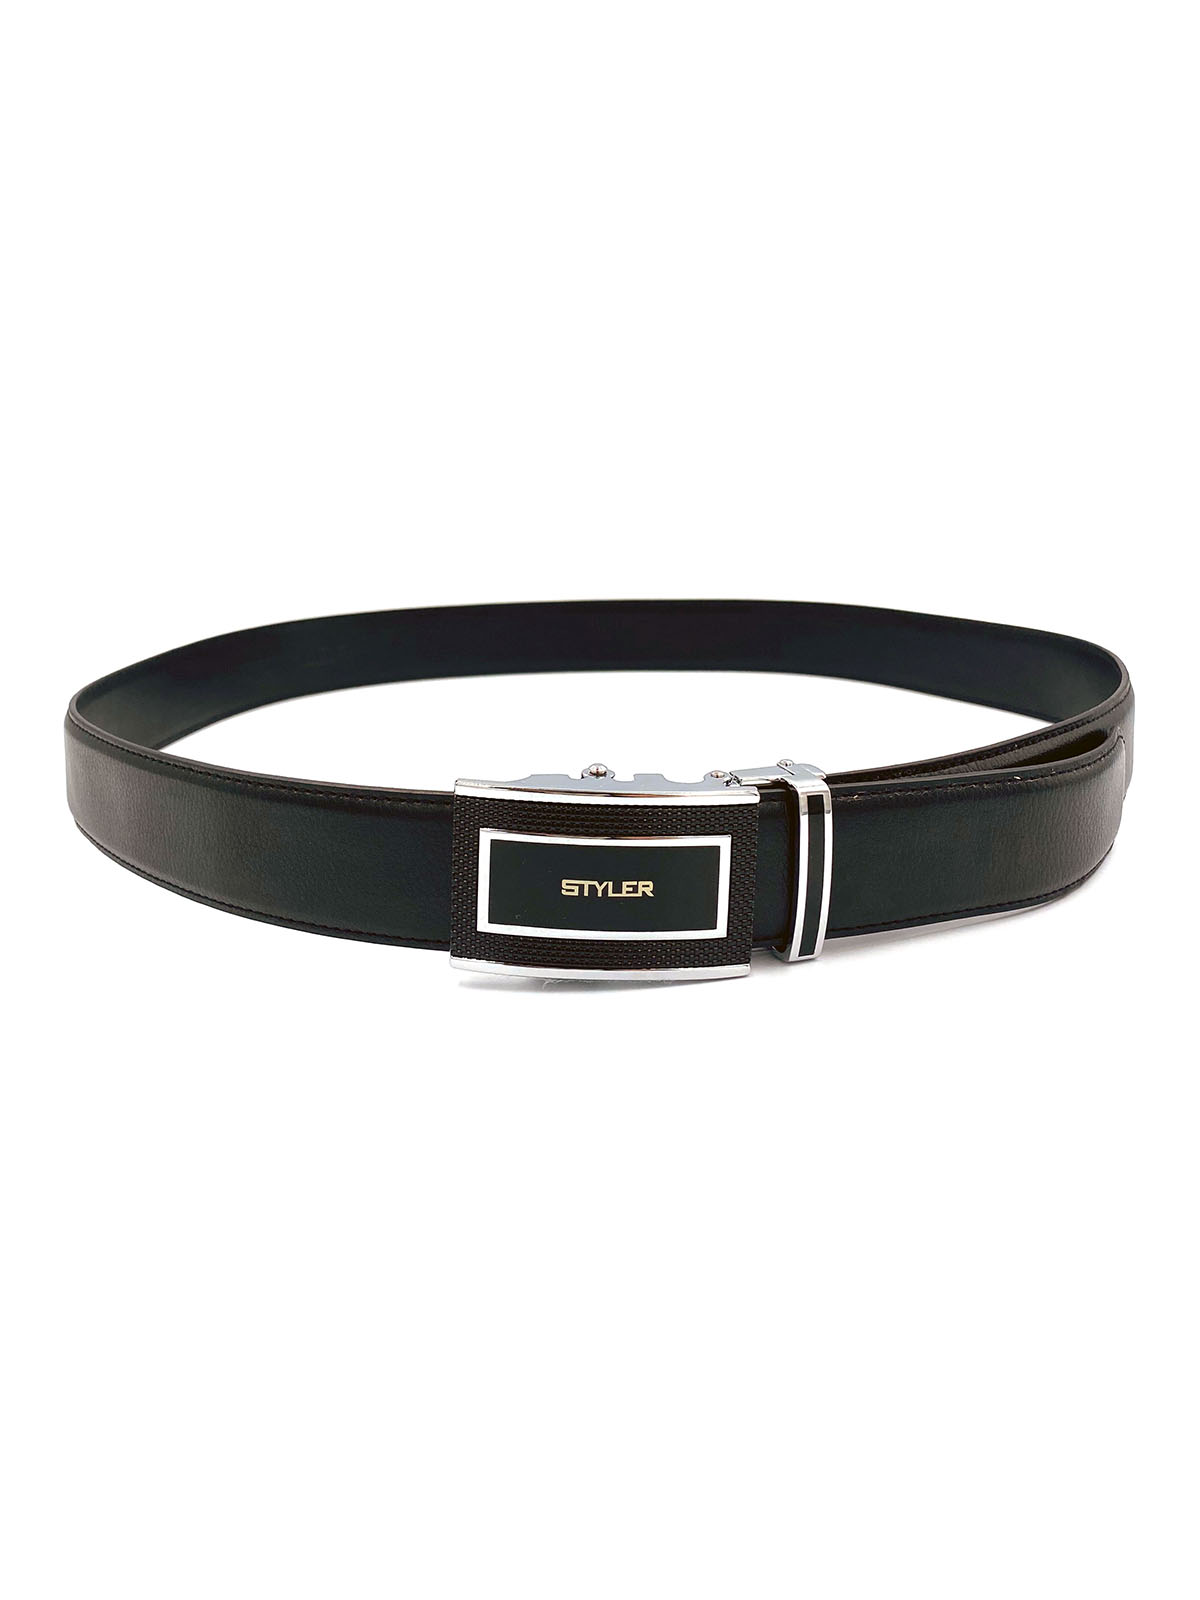 Black belt with metal logo plate - 10425 - € 21.37 img2